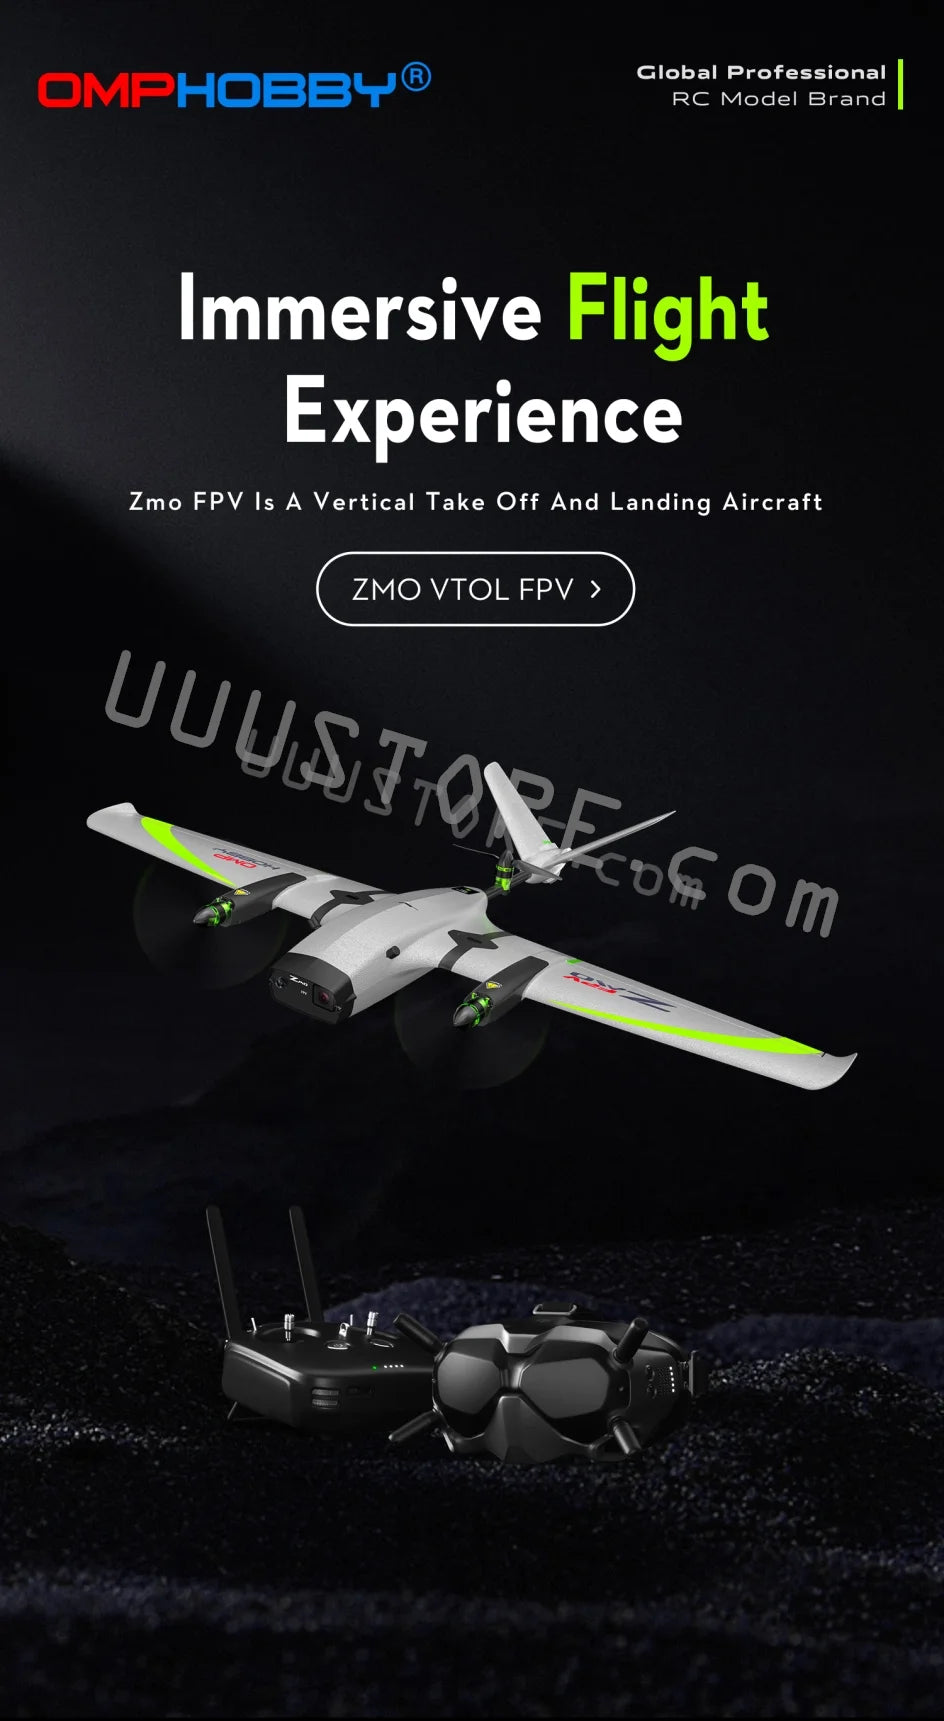 OMPHOBBY ZMO VTOL RC AirPlane , OMPHOBBY RC Model Brand Immersive Flight Experience Zmo FP